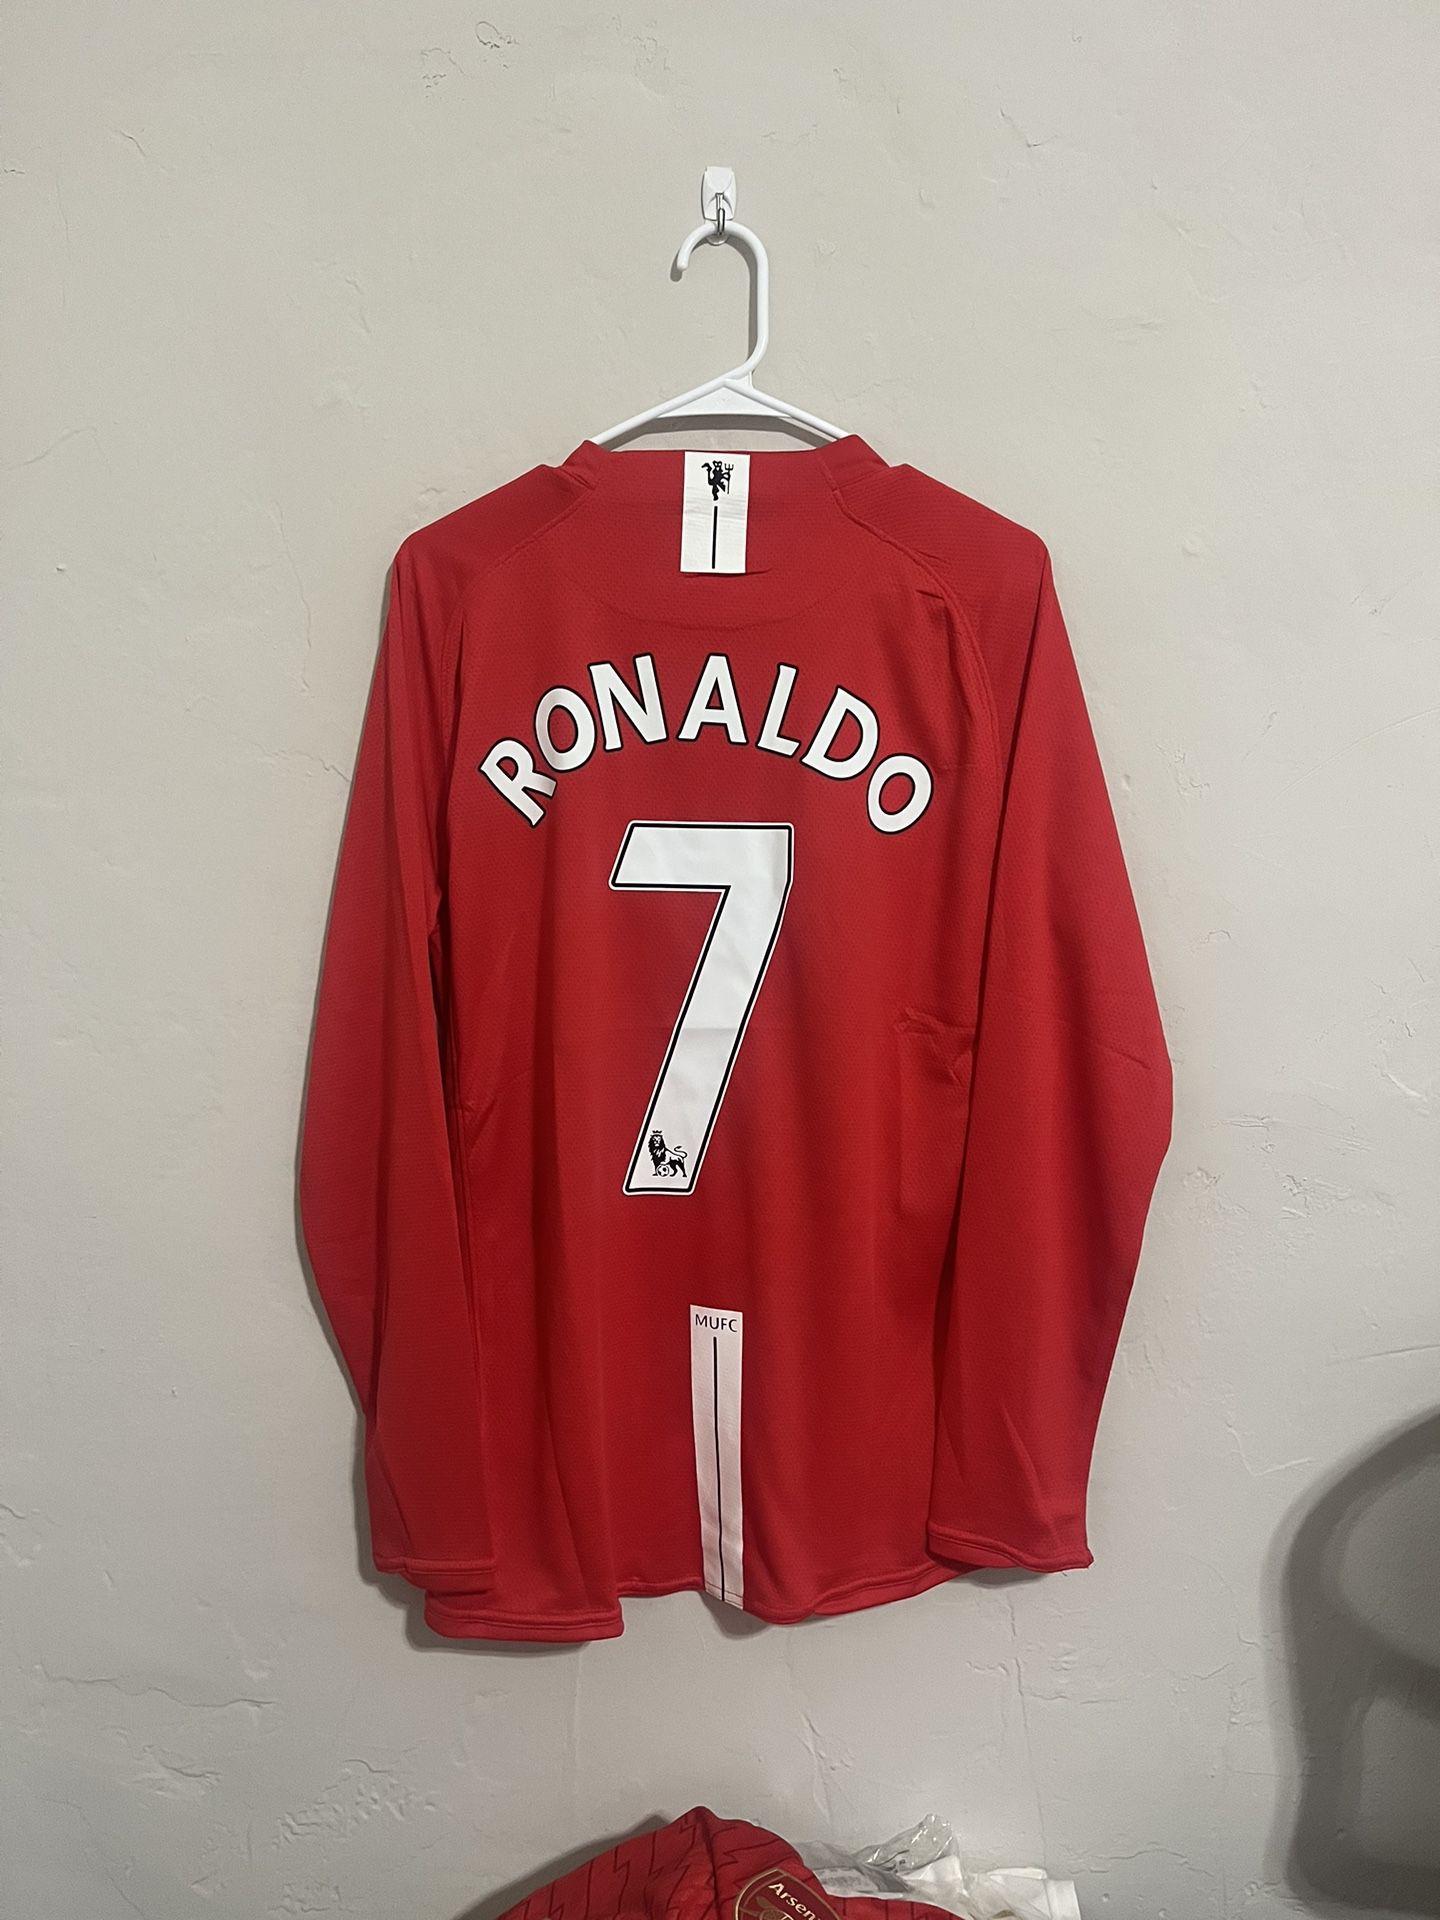 Manchester United 2007-08 Home Ronaldo Jersey Medium 